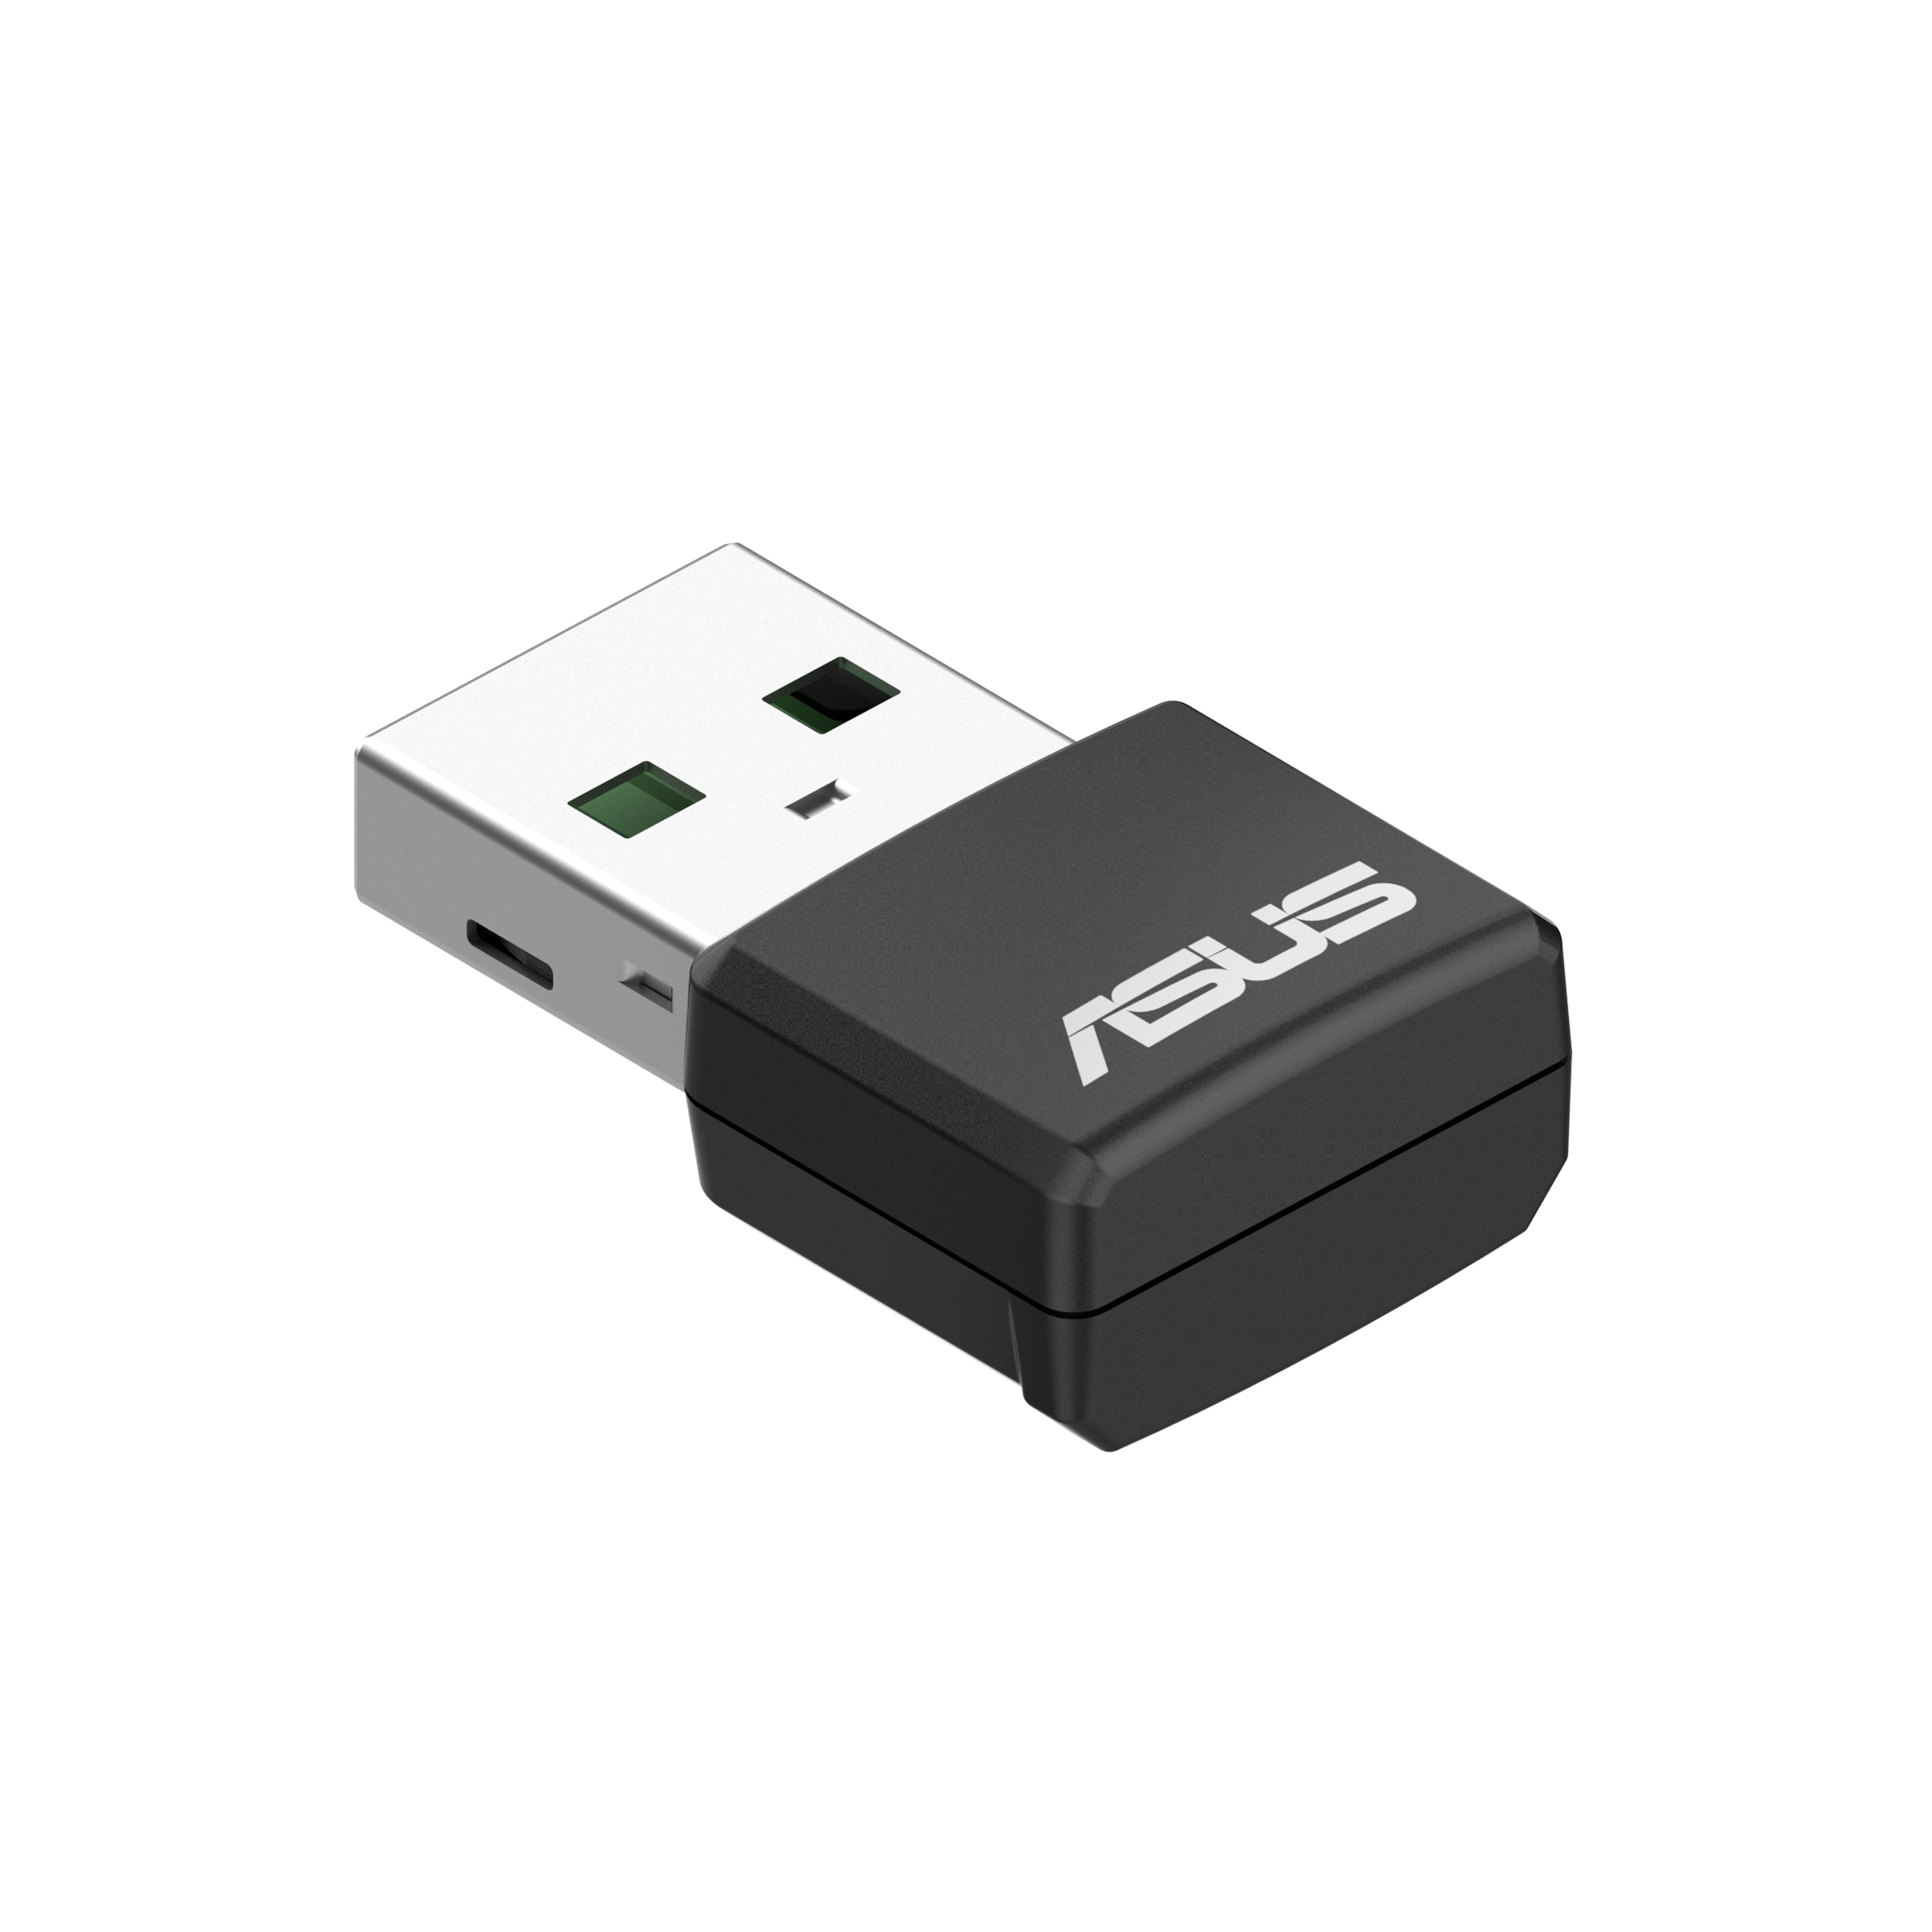 USB-AX55 Nano, Adaptador WiFi USB